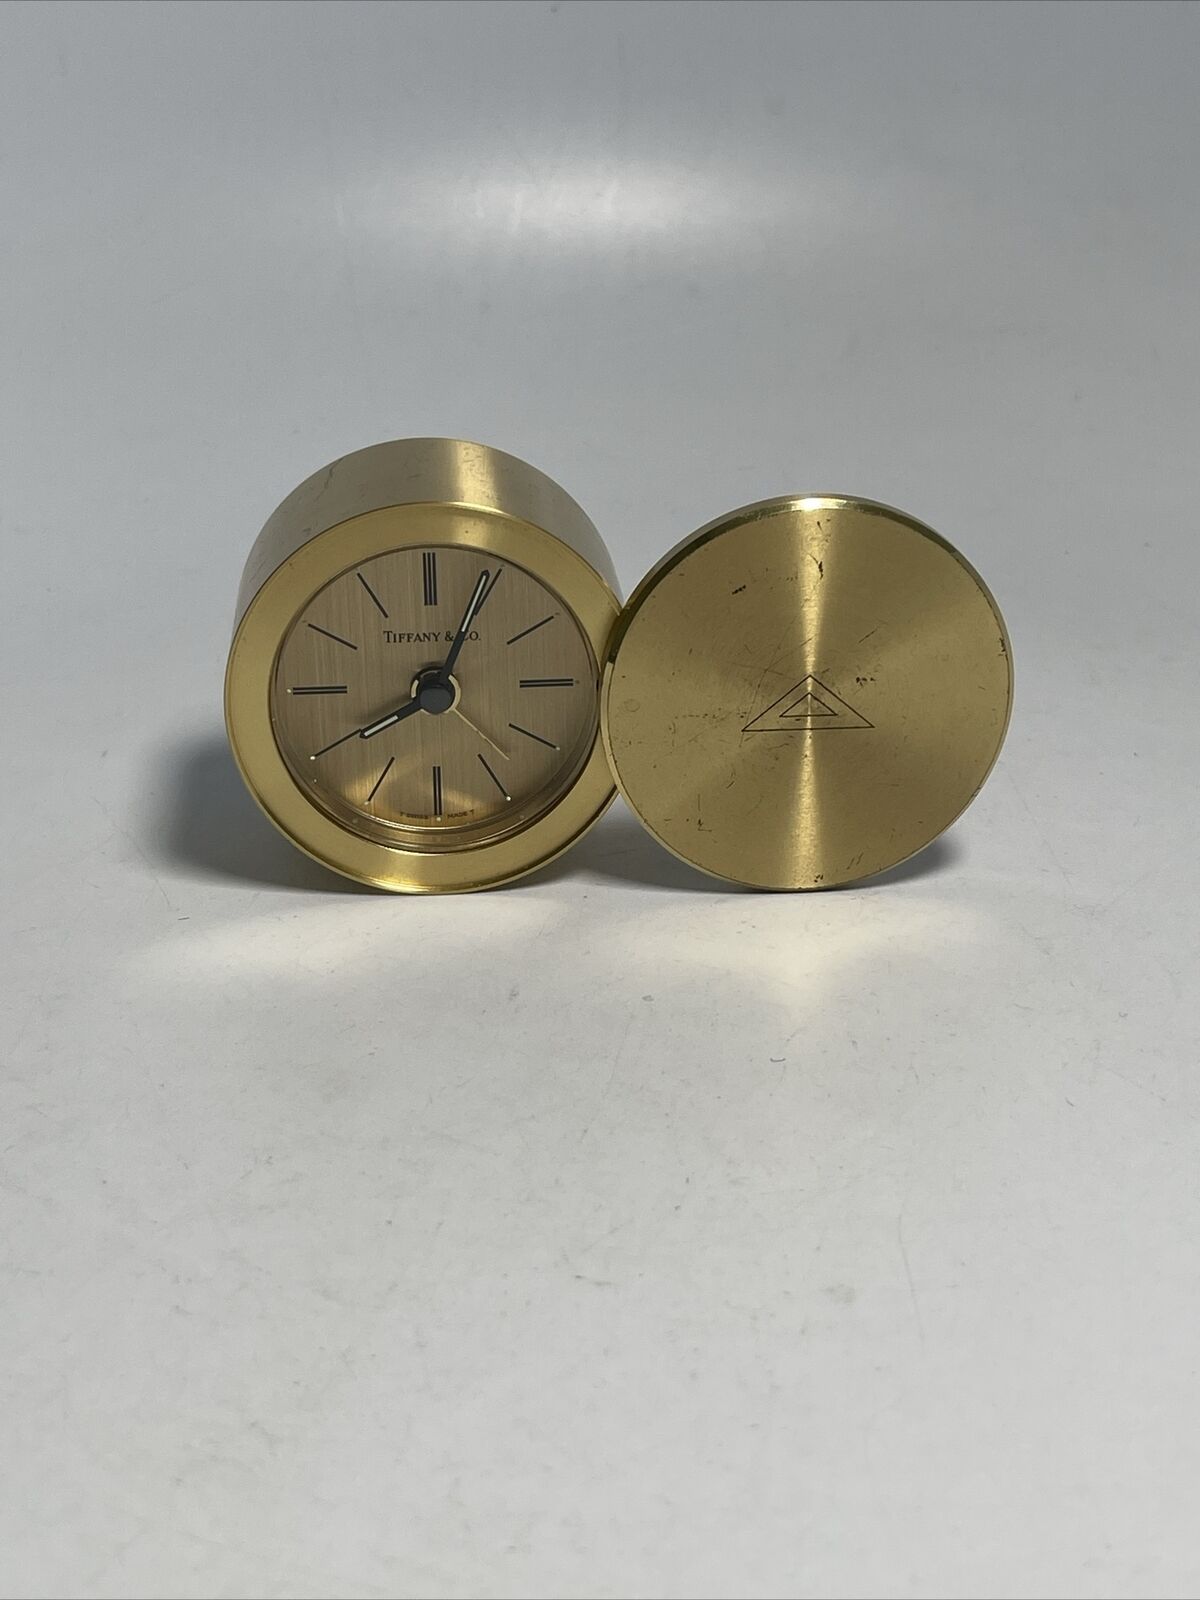 VTG Tiffany & Co Small Round Travel Alarm Clock Quartz Solid Brass Swiss Made